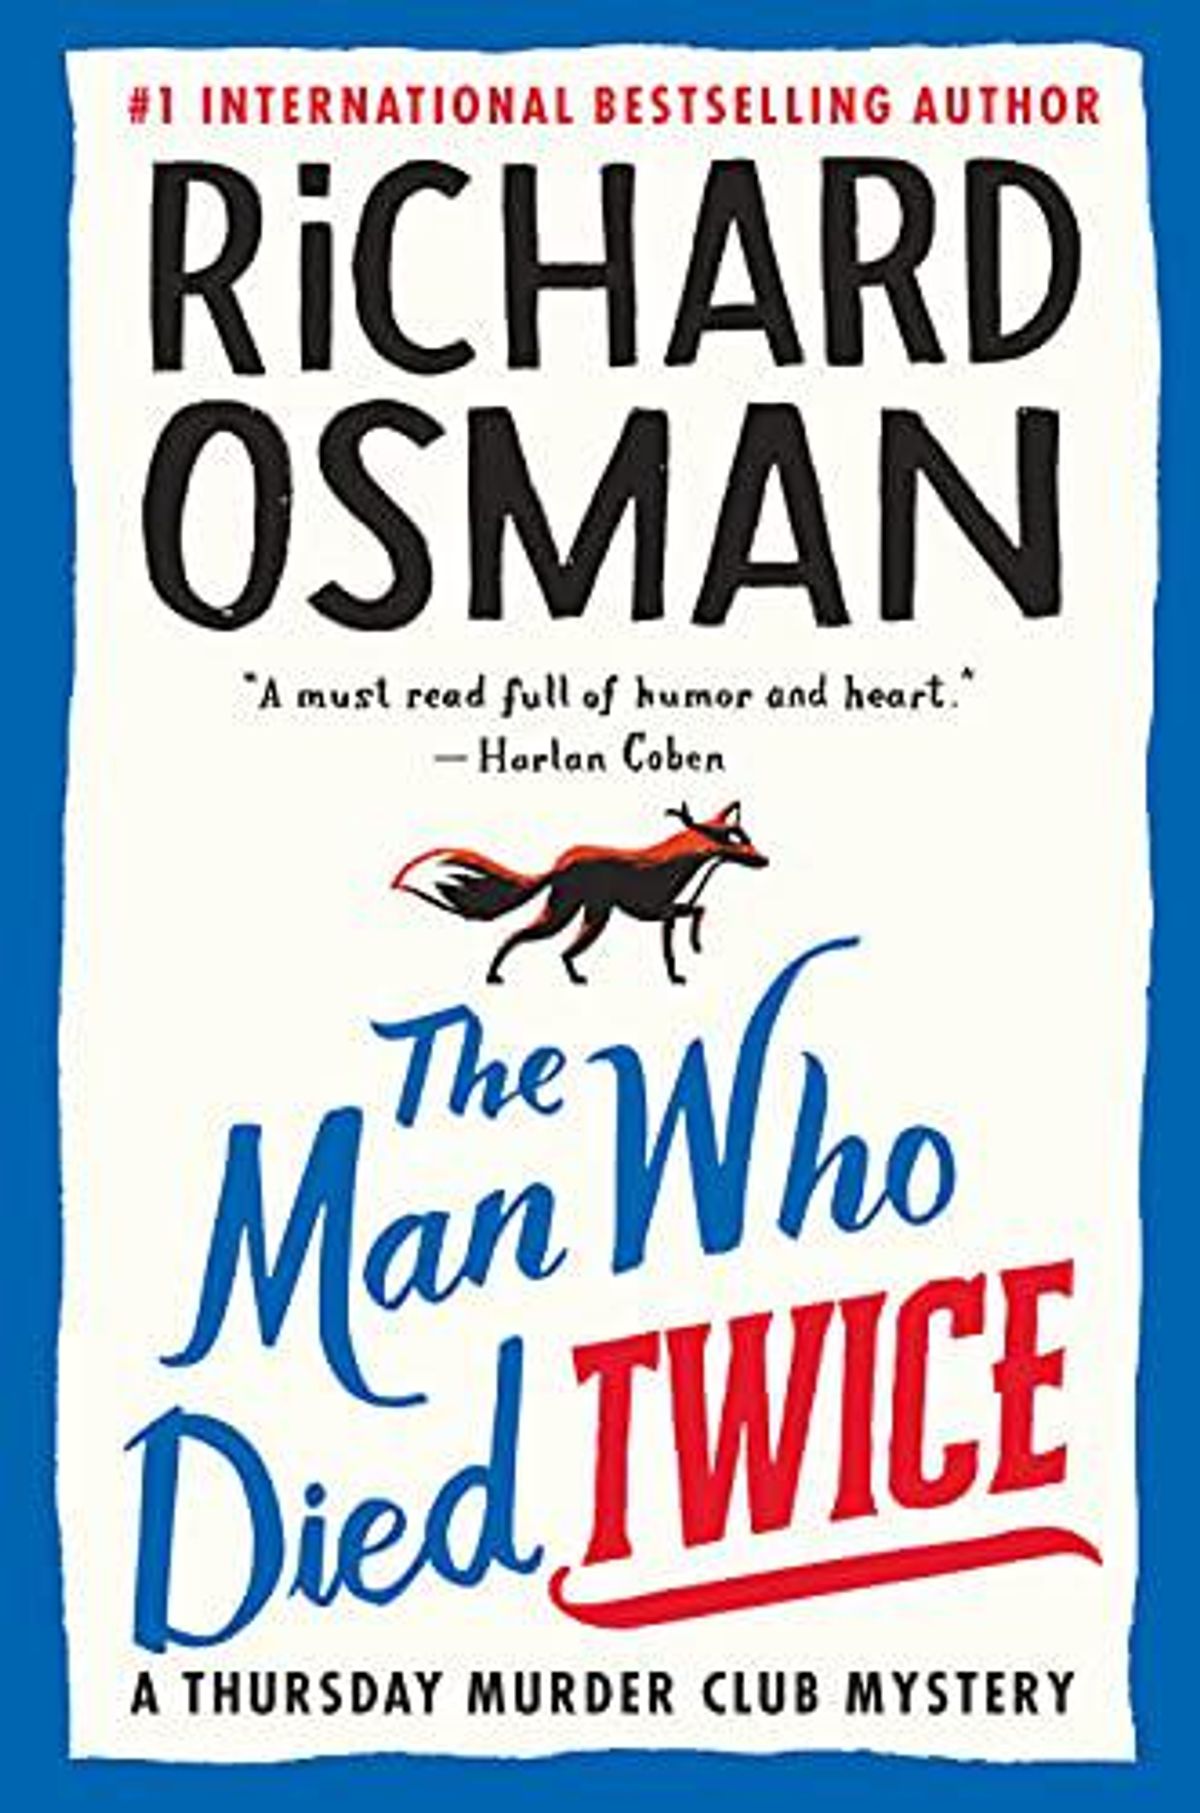  richard osman the man who died twice a thursday murder club mystery